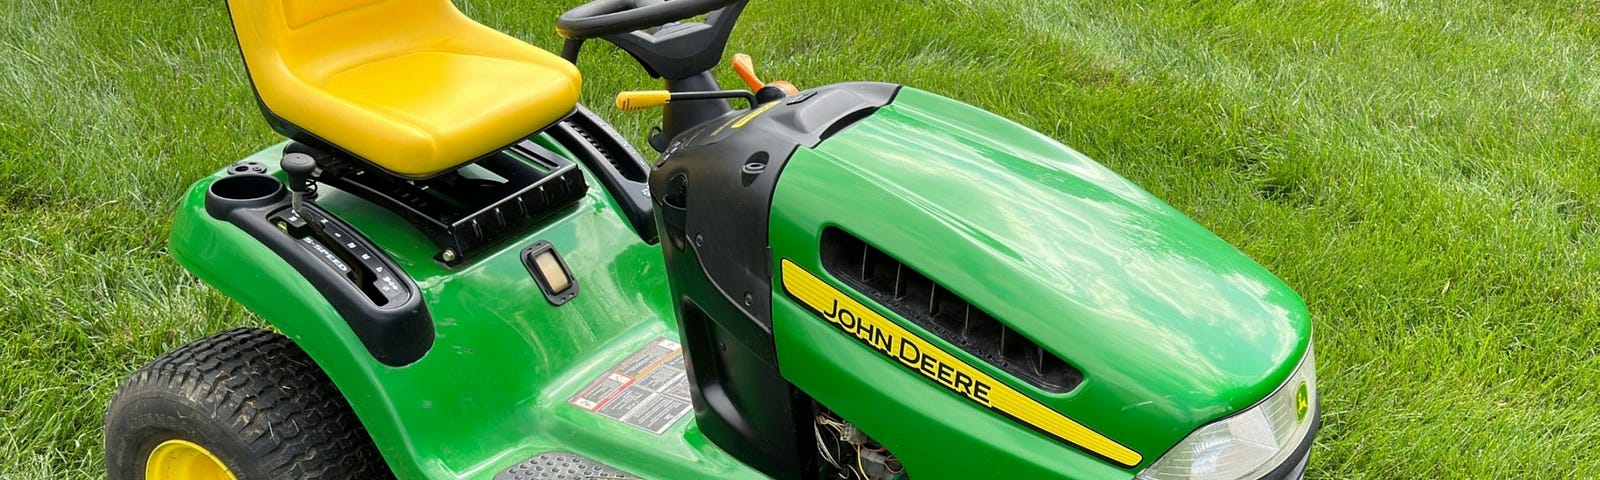 A green riding lawn mower.